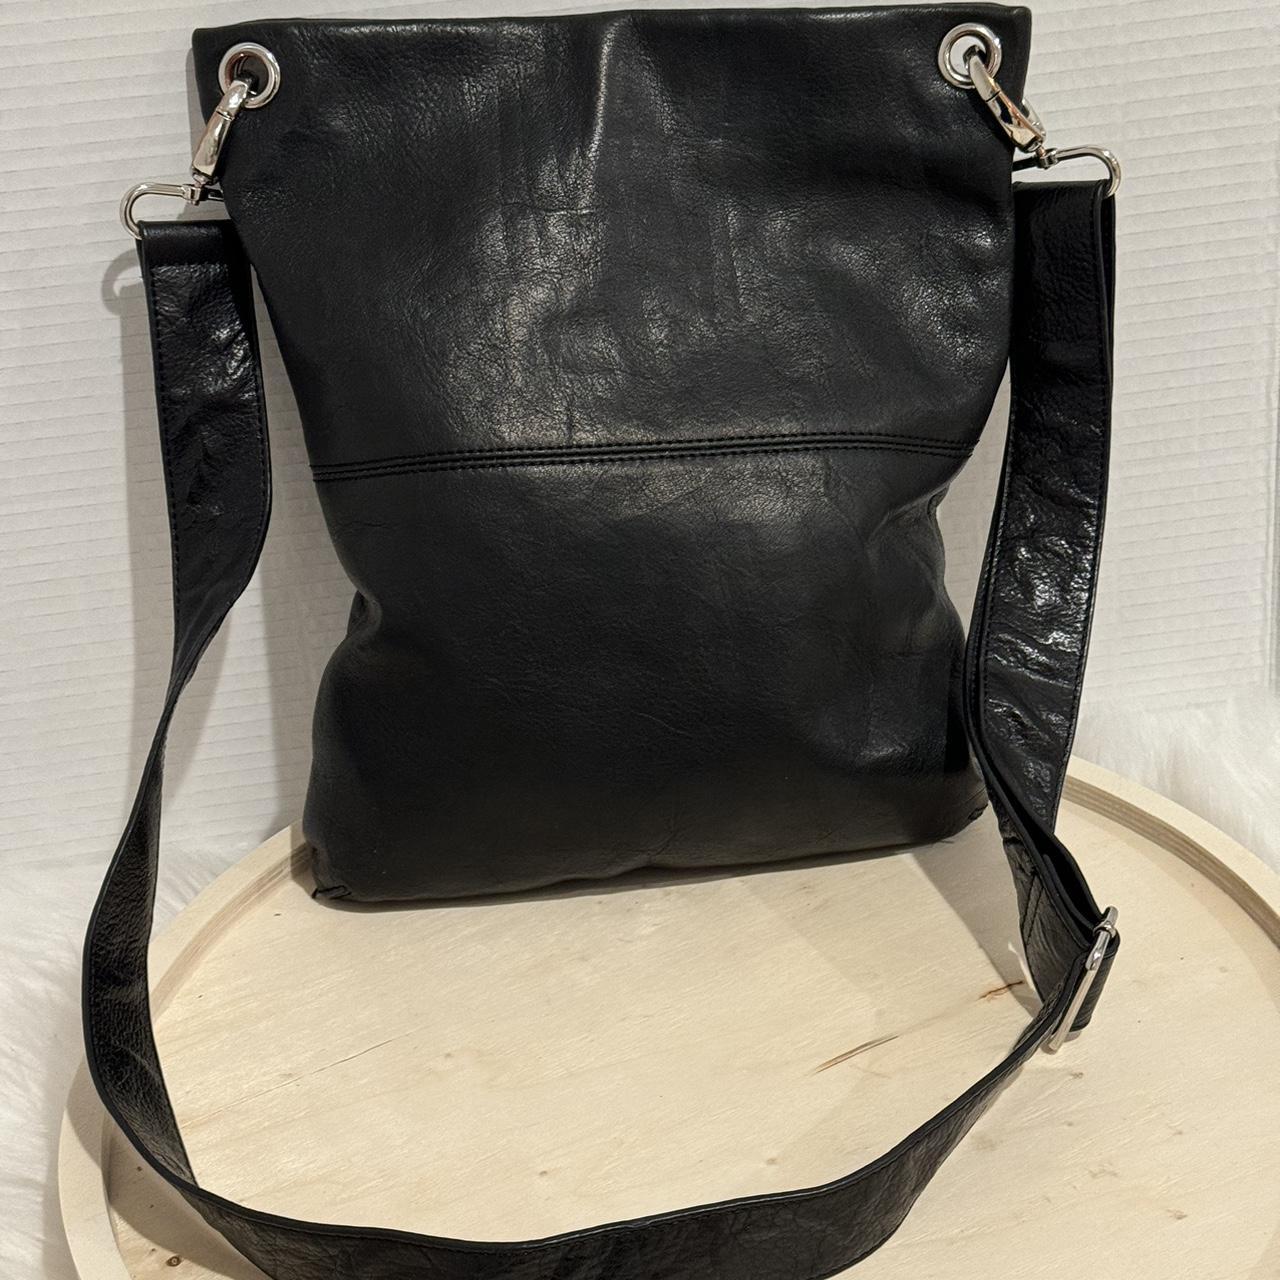 Genuine black leather crossbody satchel bag with two... - Depop